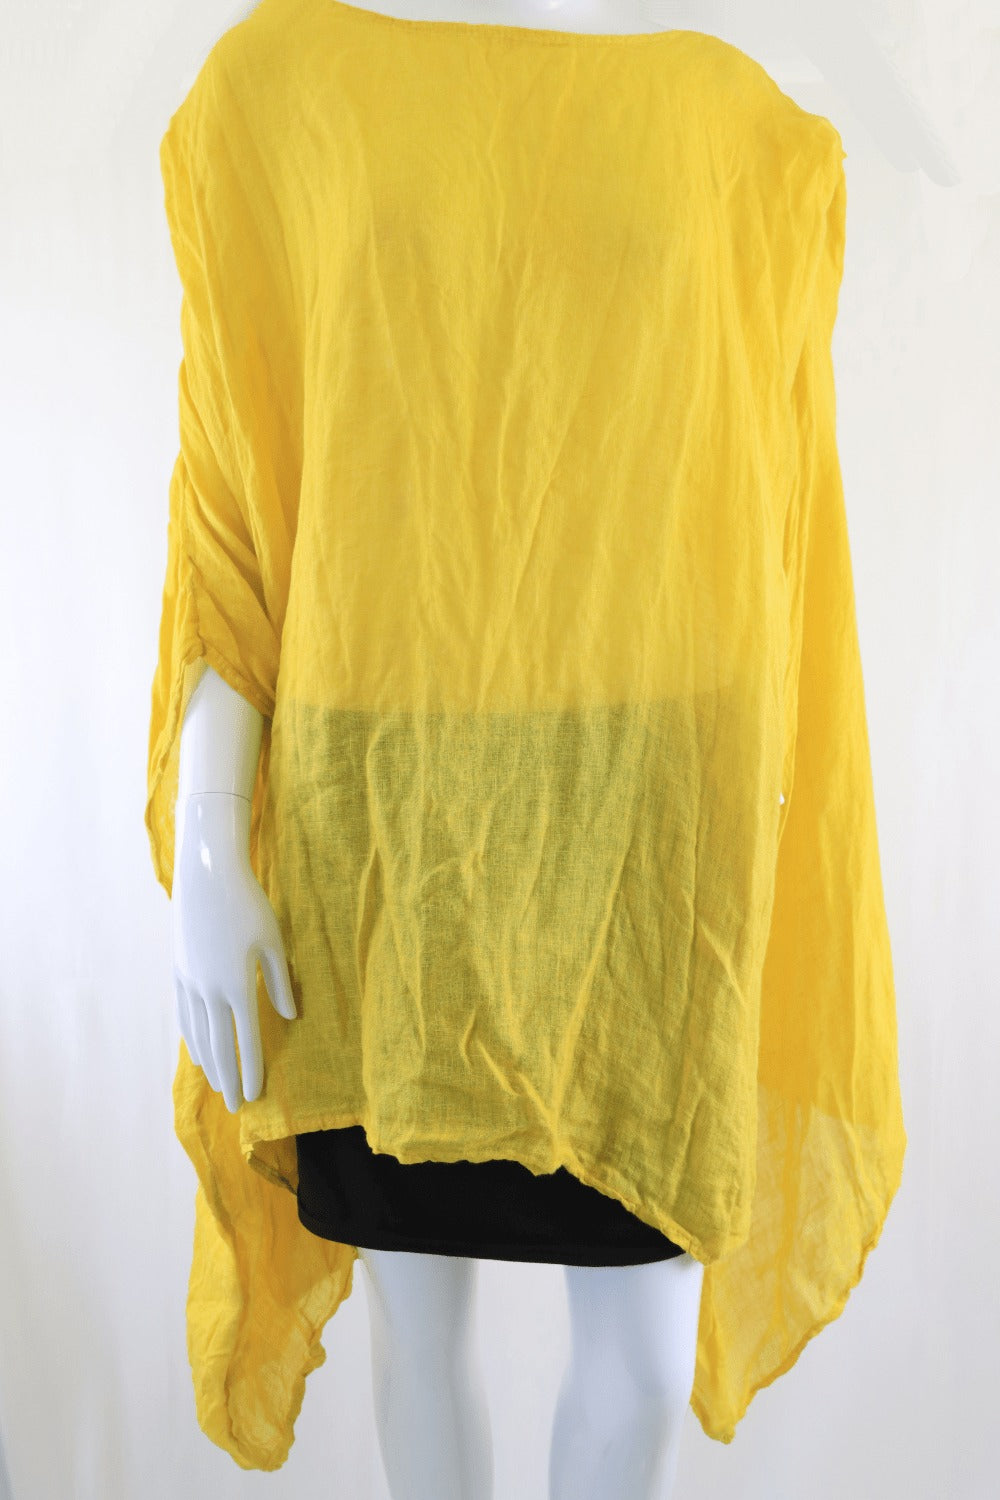 Boutique Yellow Dress L